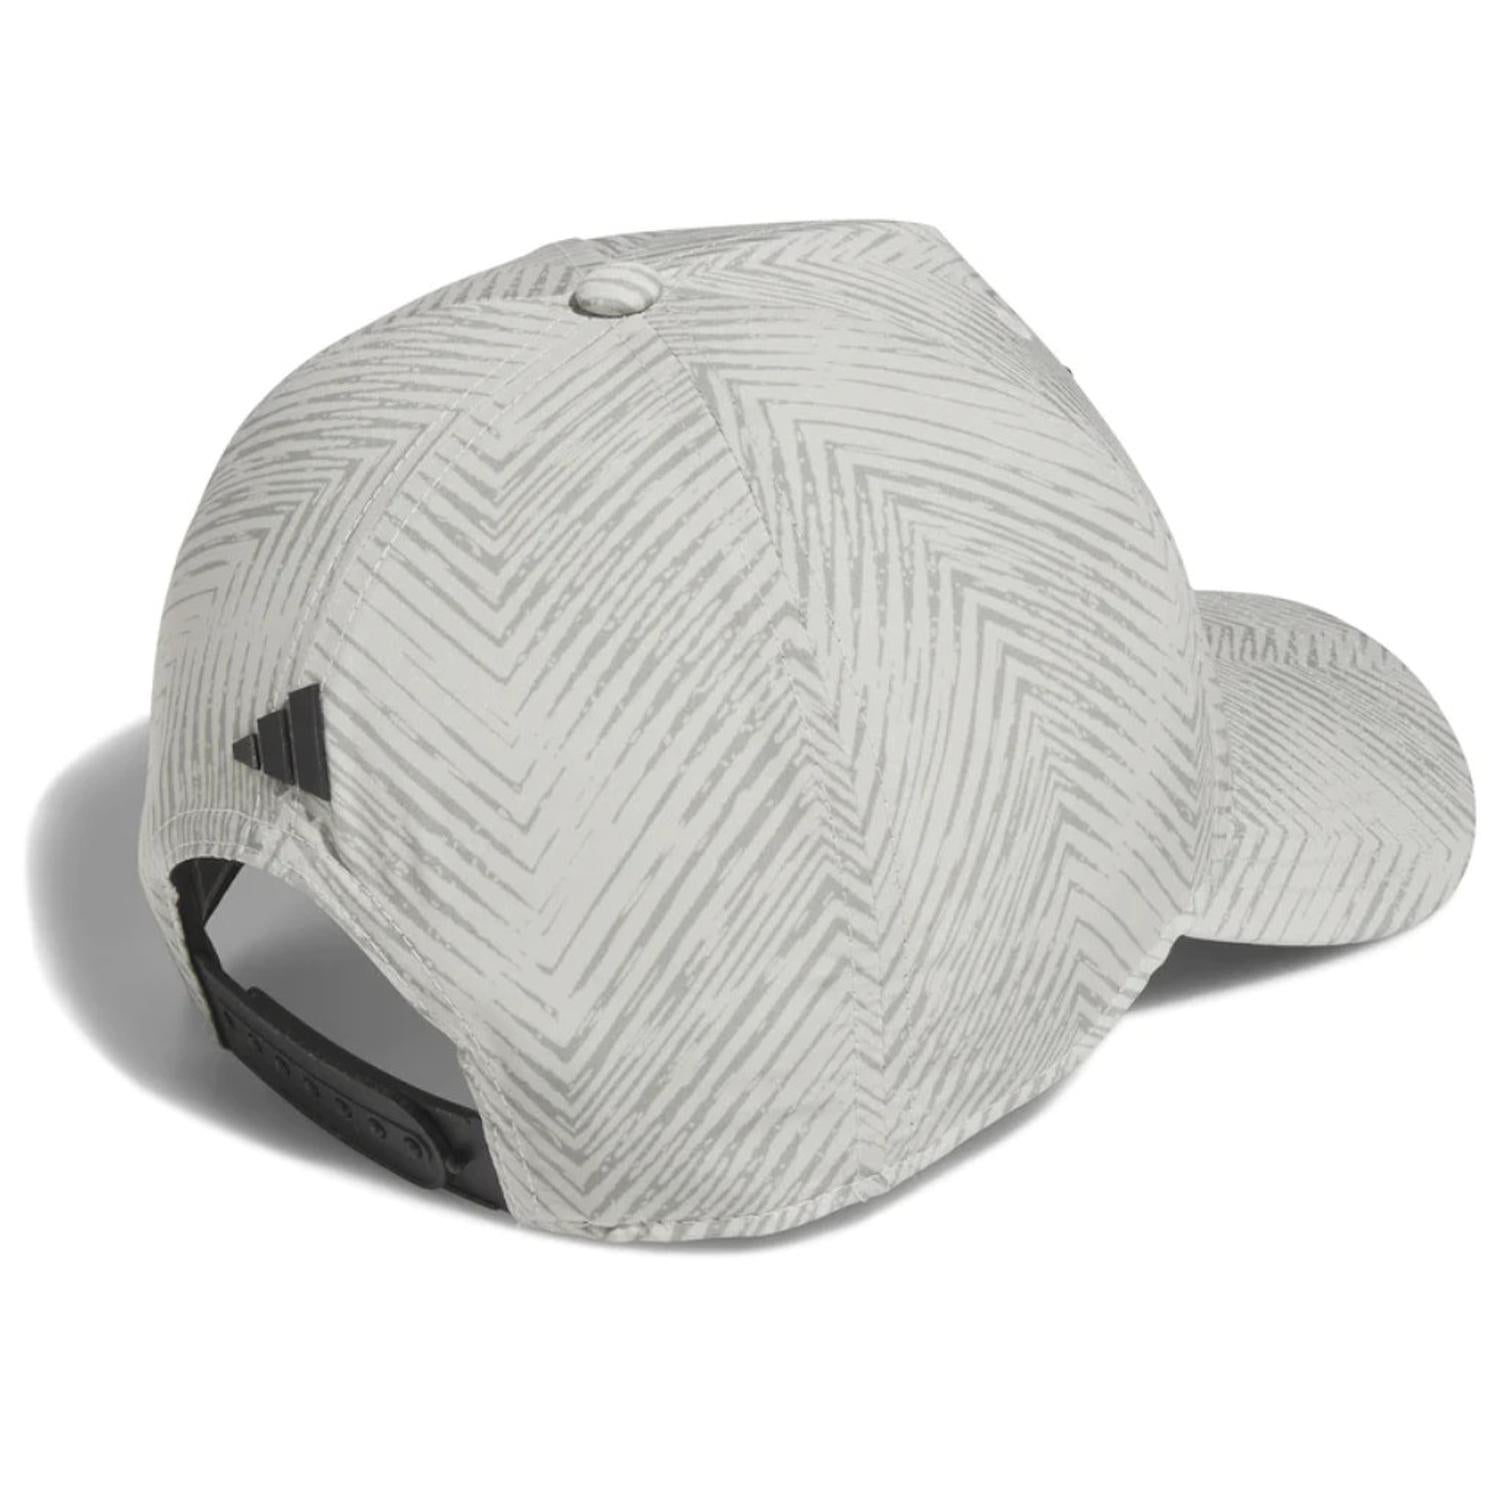 Adidas Tour Hat 3 Stripes Print